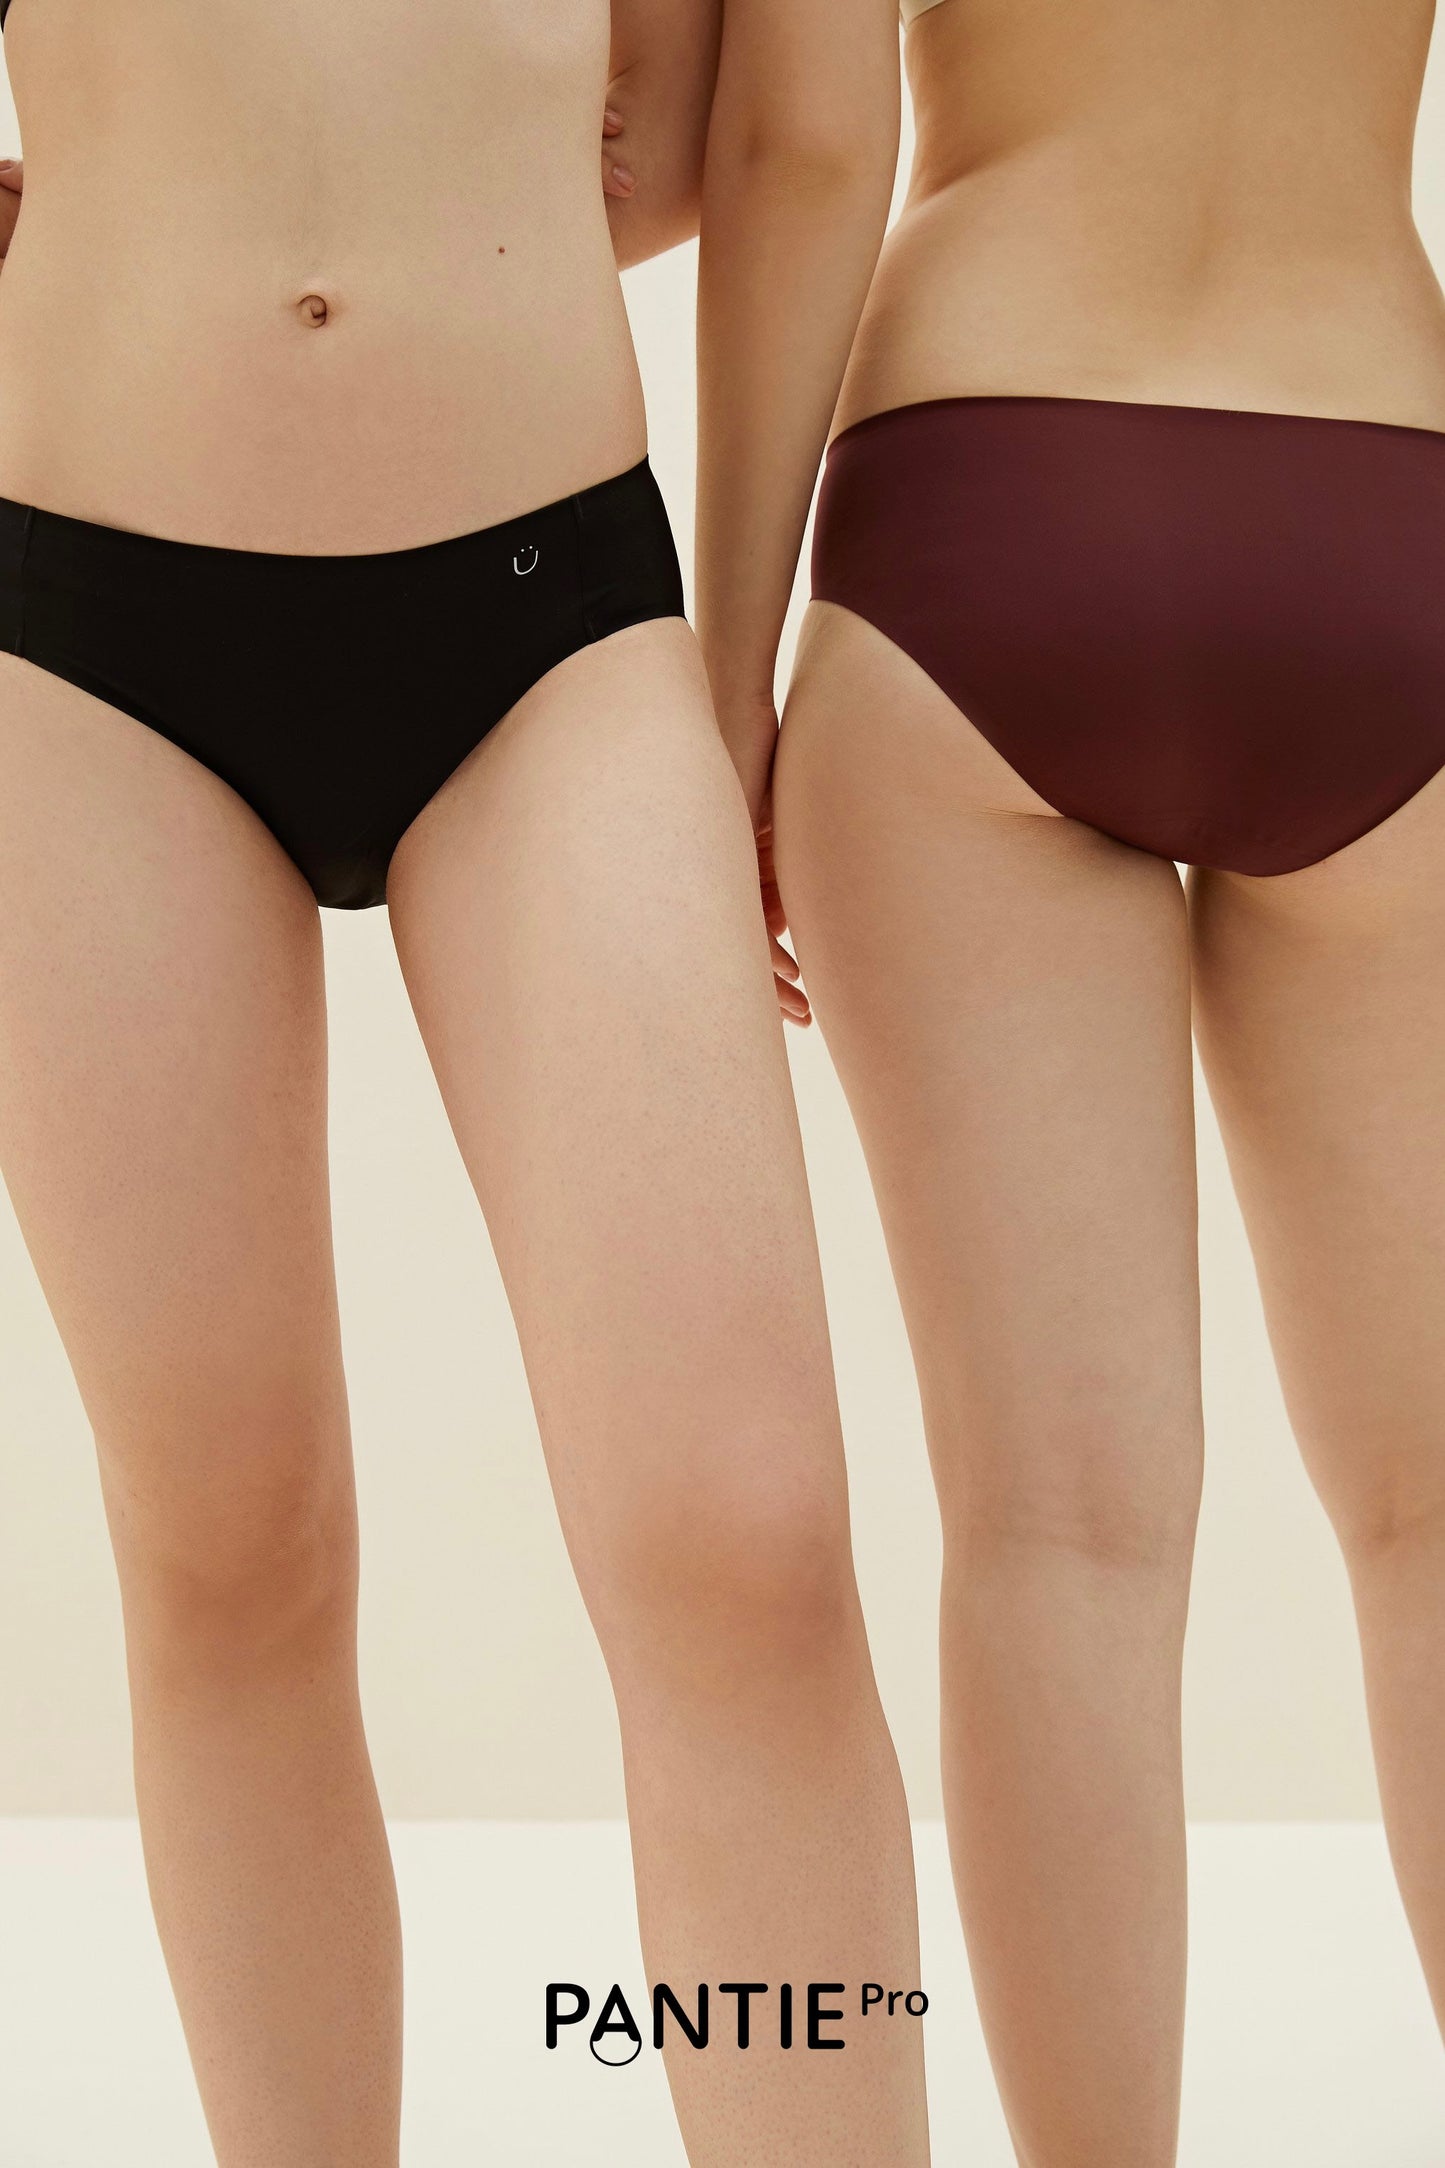 two women in underwear, one in black and one in maroon